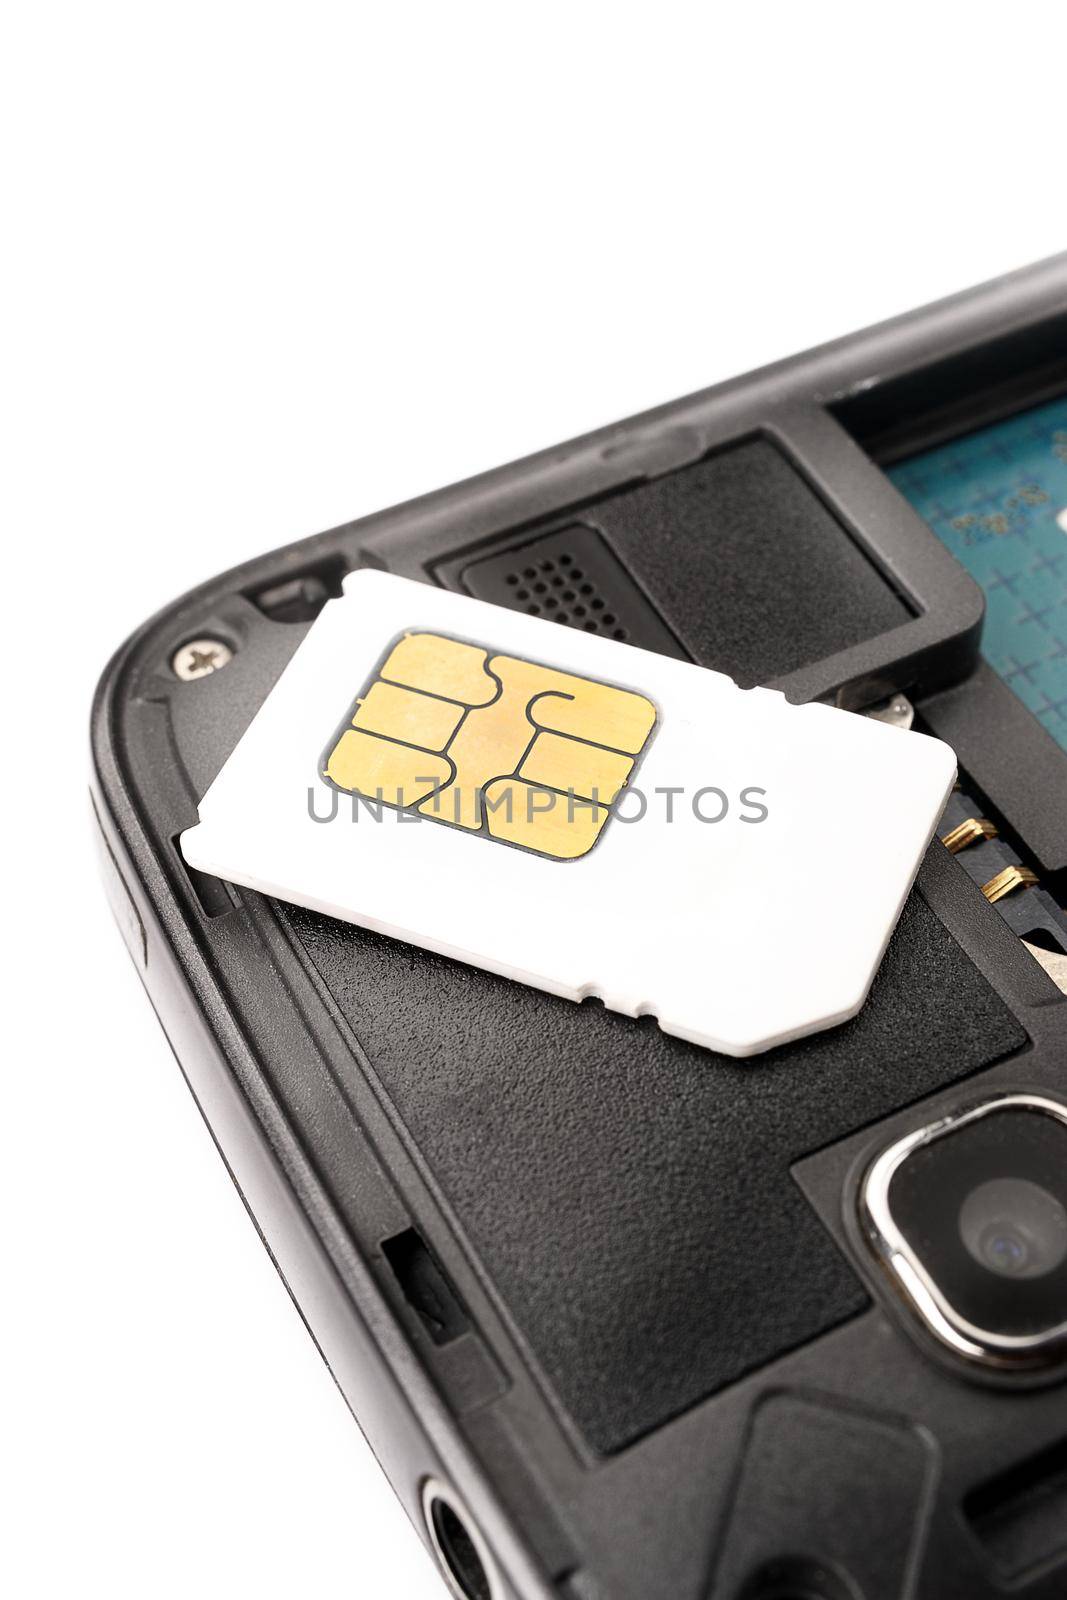 SIM card on the smart phone